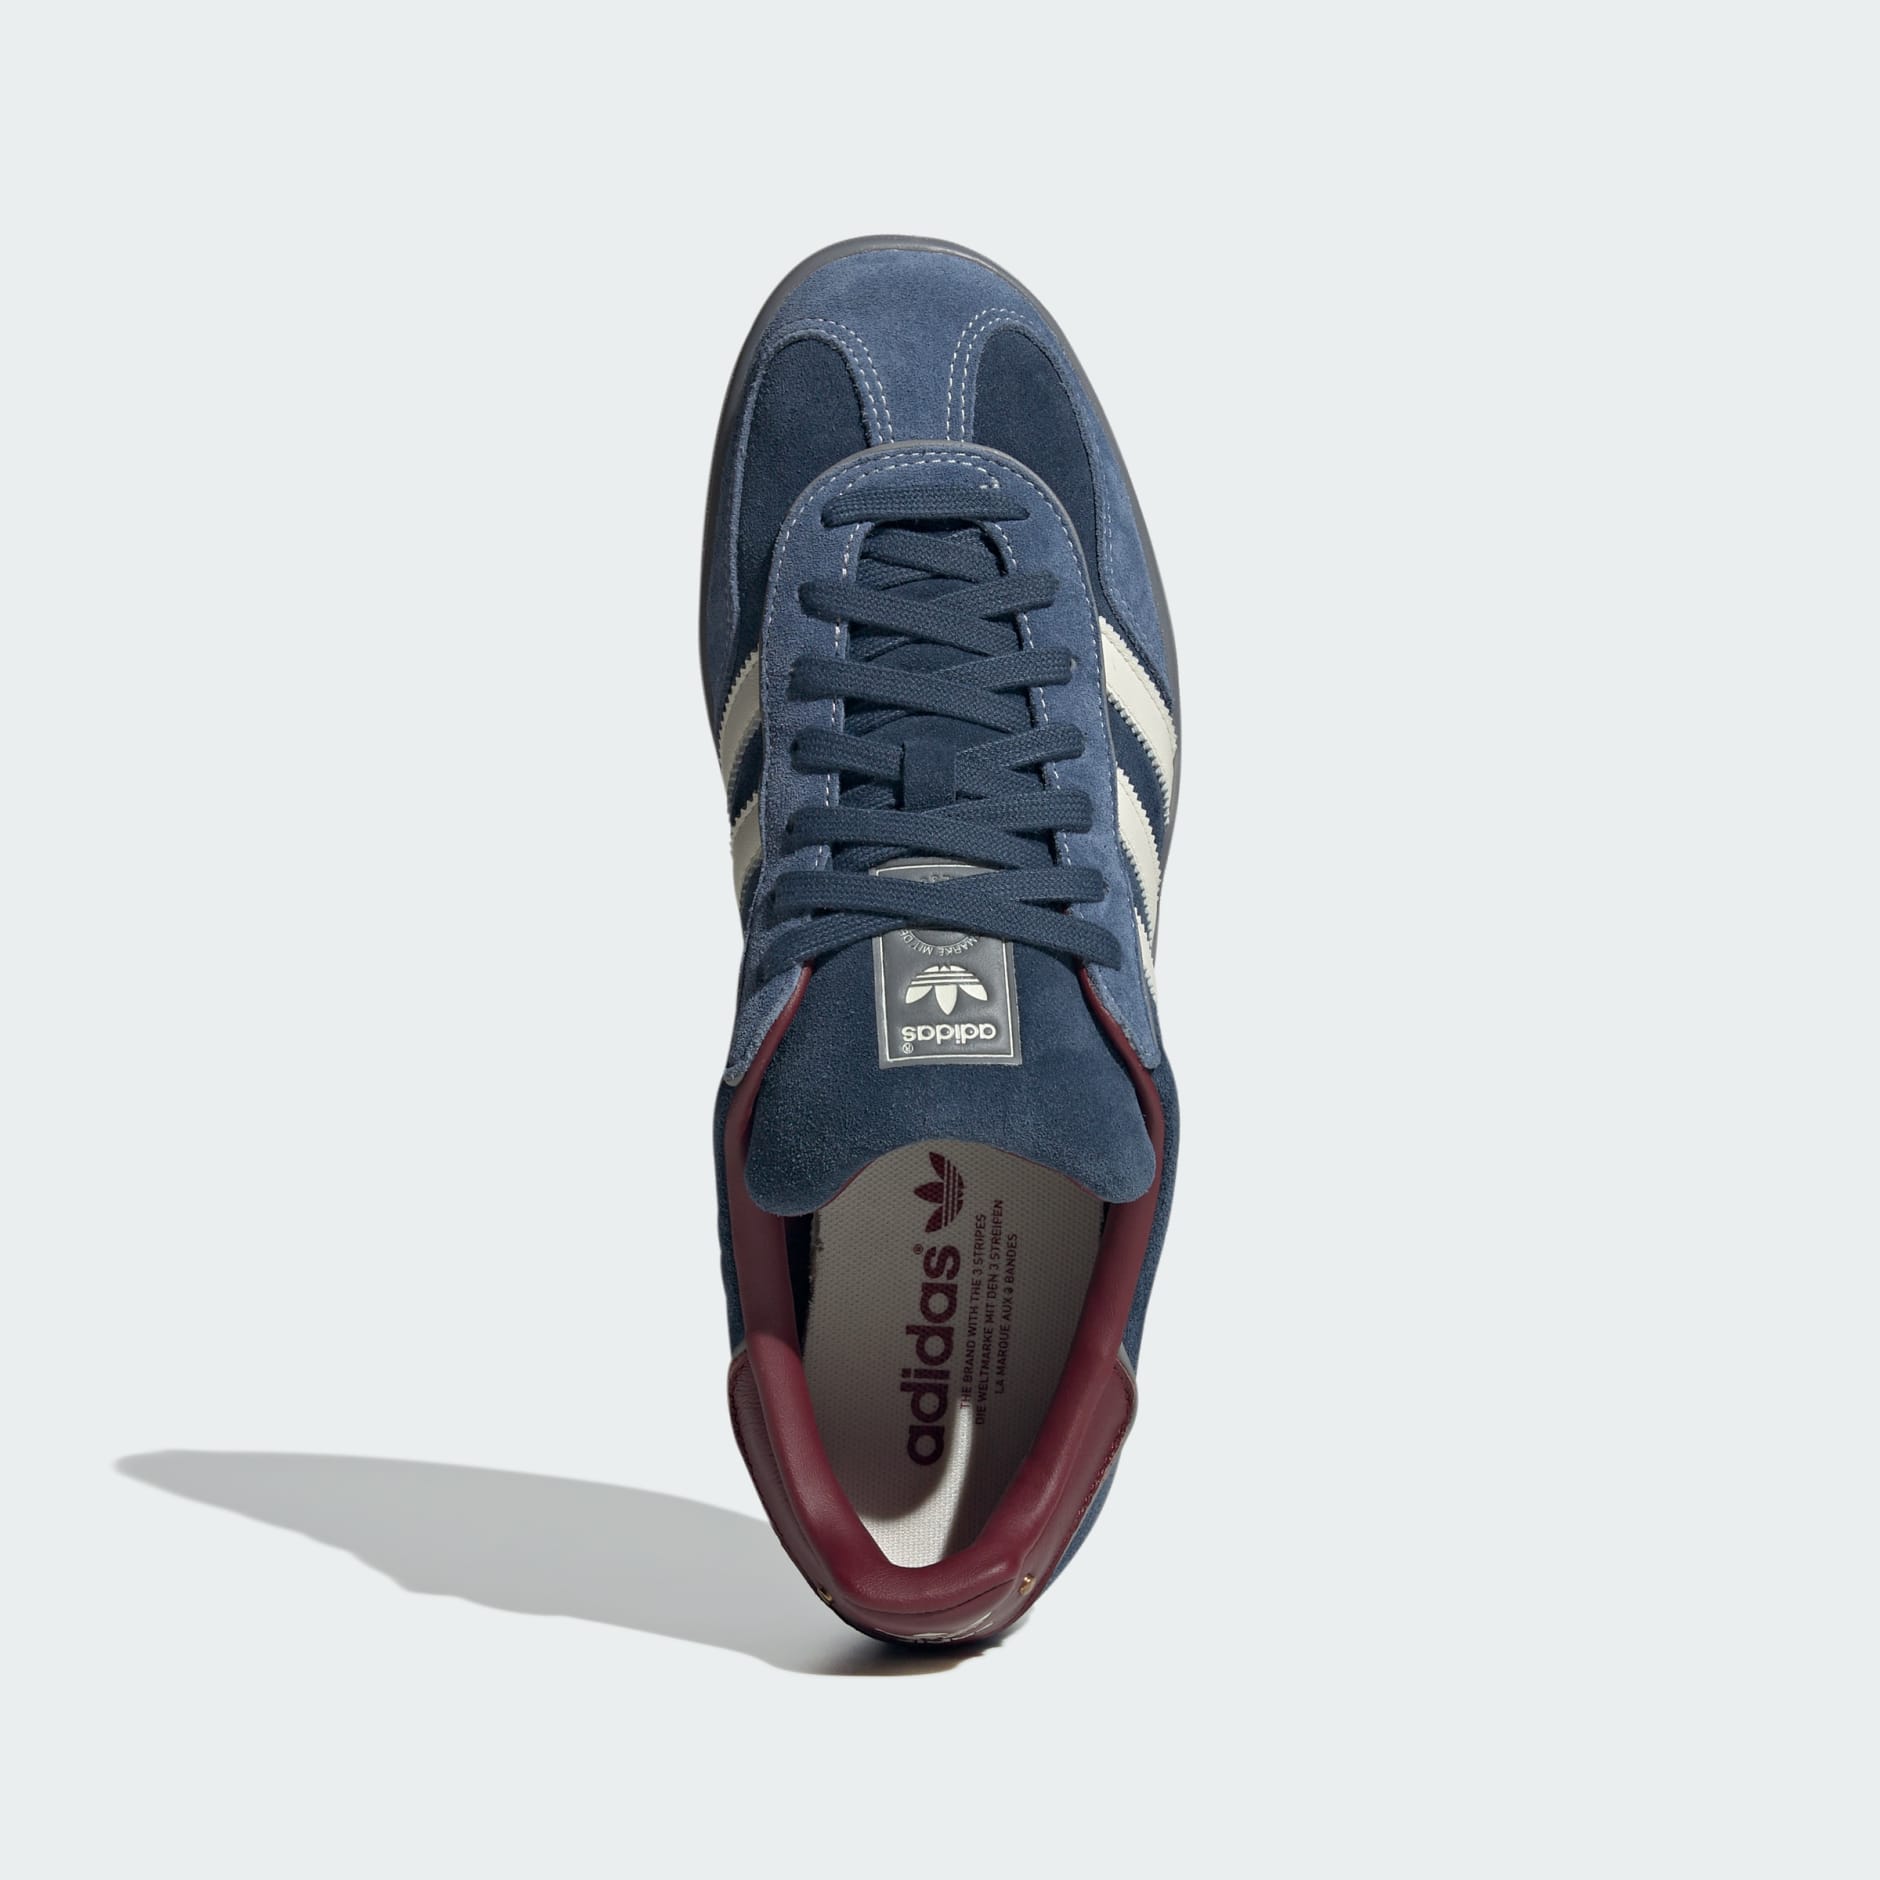 Shoes - Gazelle Indoor shoes - Blue | adidas Oman